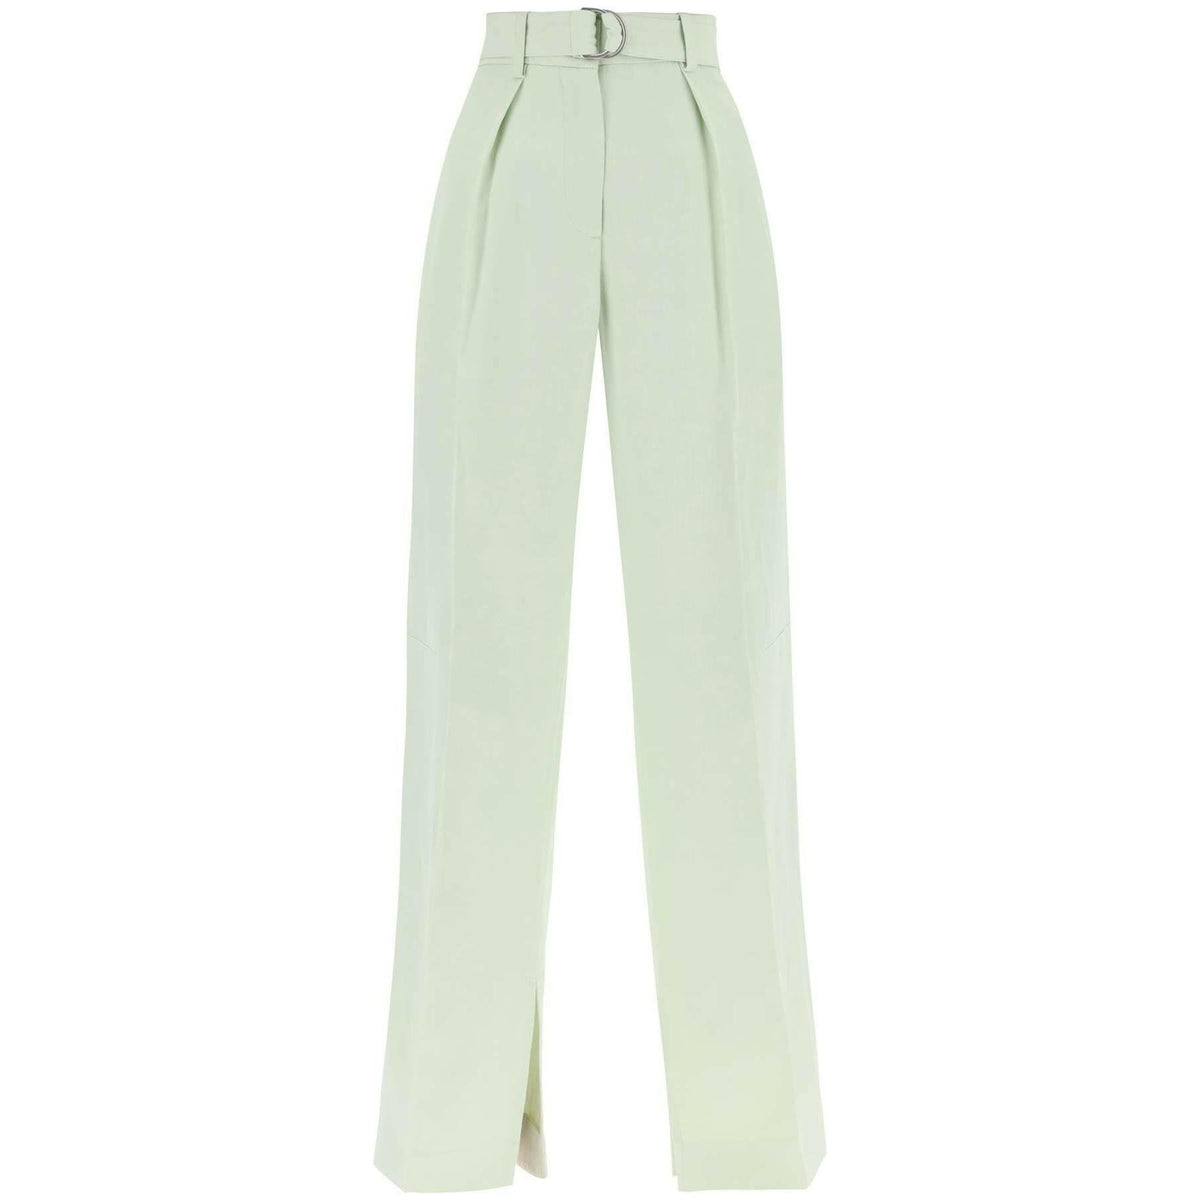 JIL SANDER - Pale Green Linen-Blend Belted Trousers - JOHN JULIA